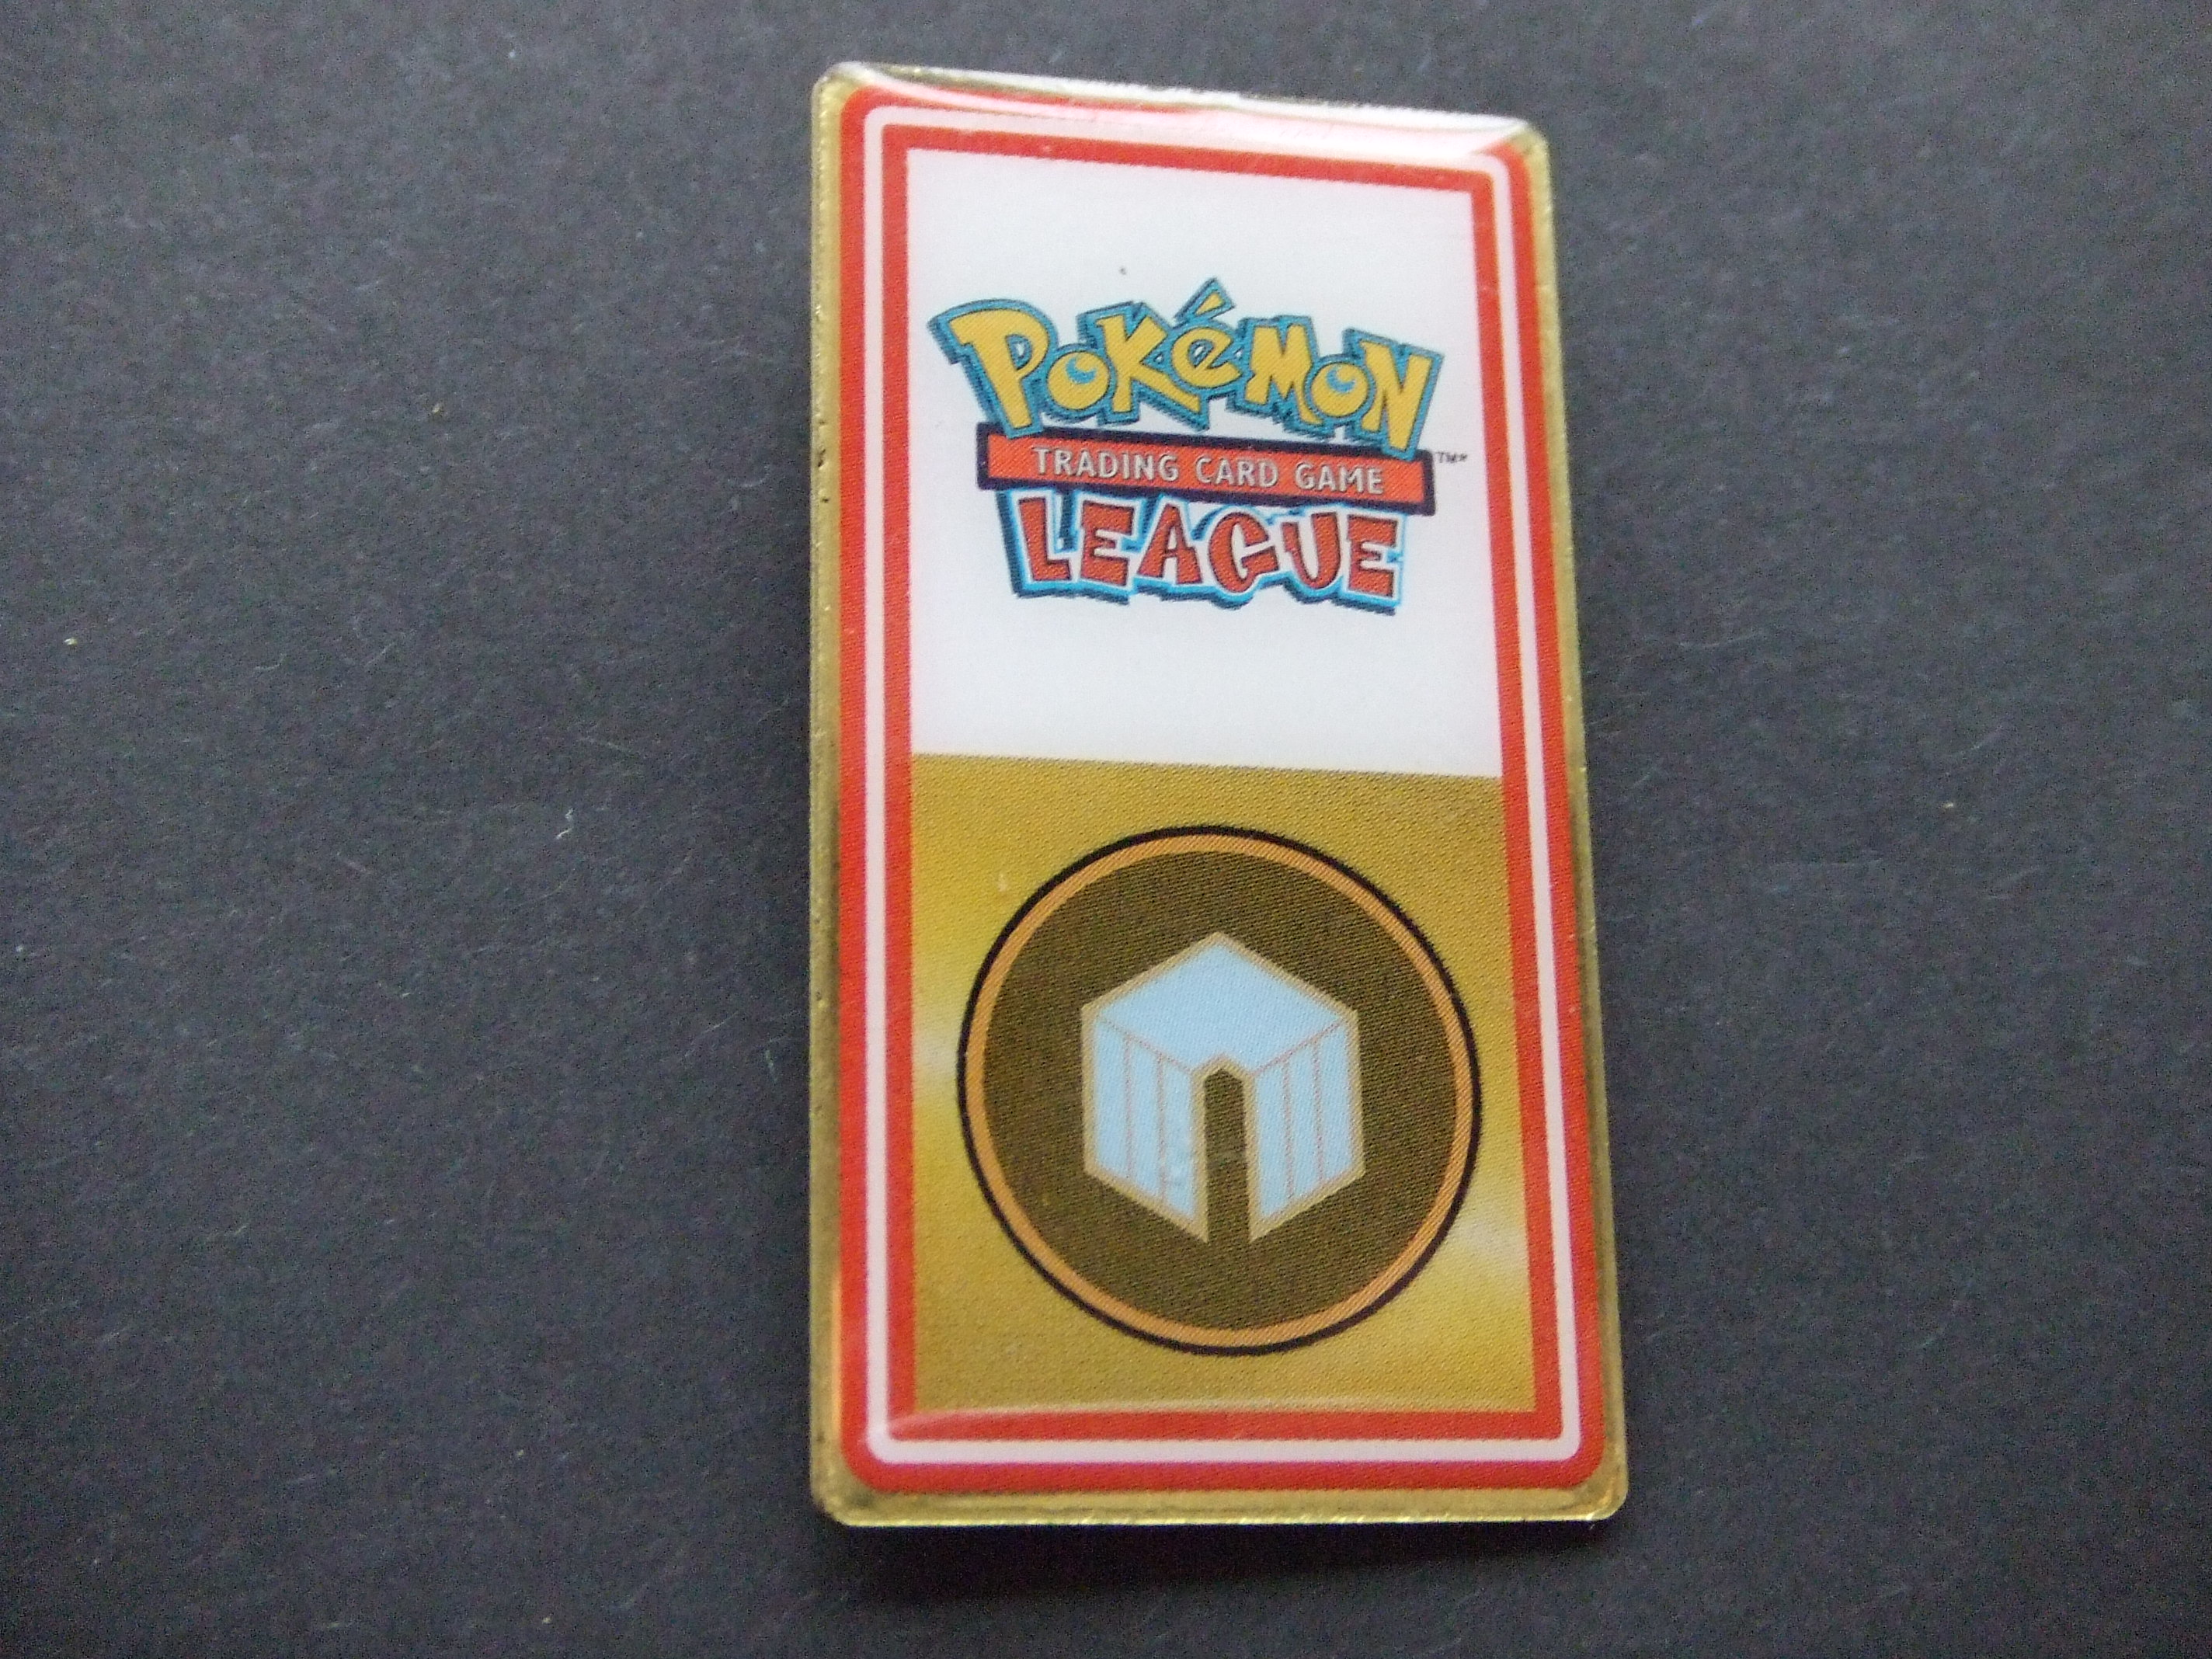 Pokémon trading card game League